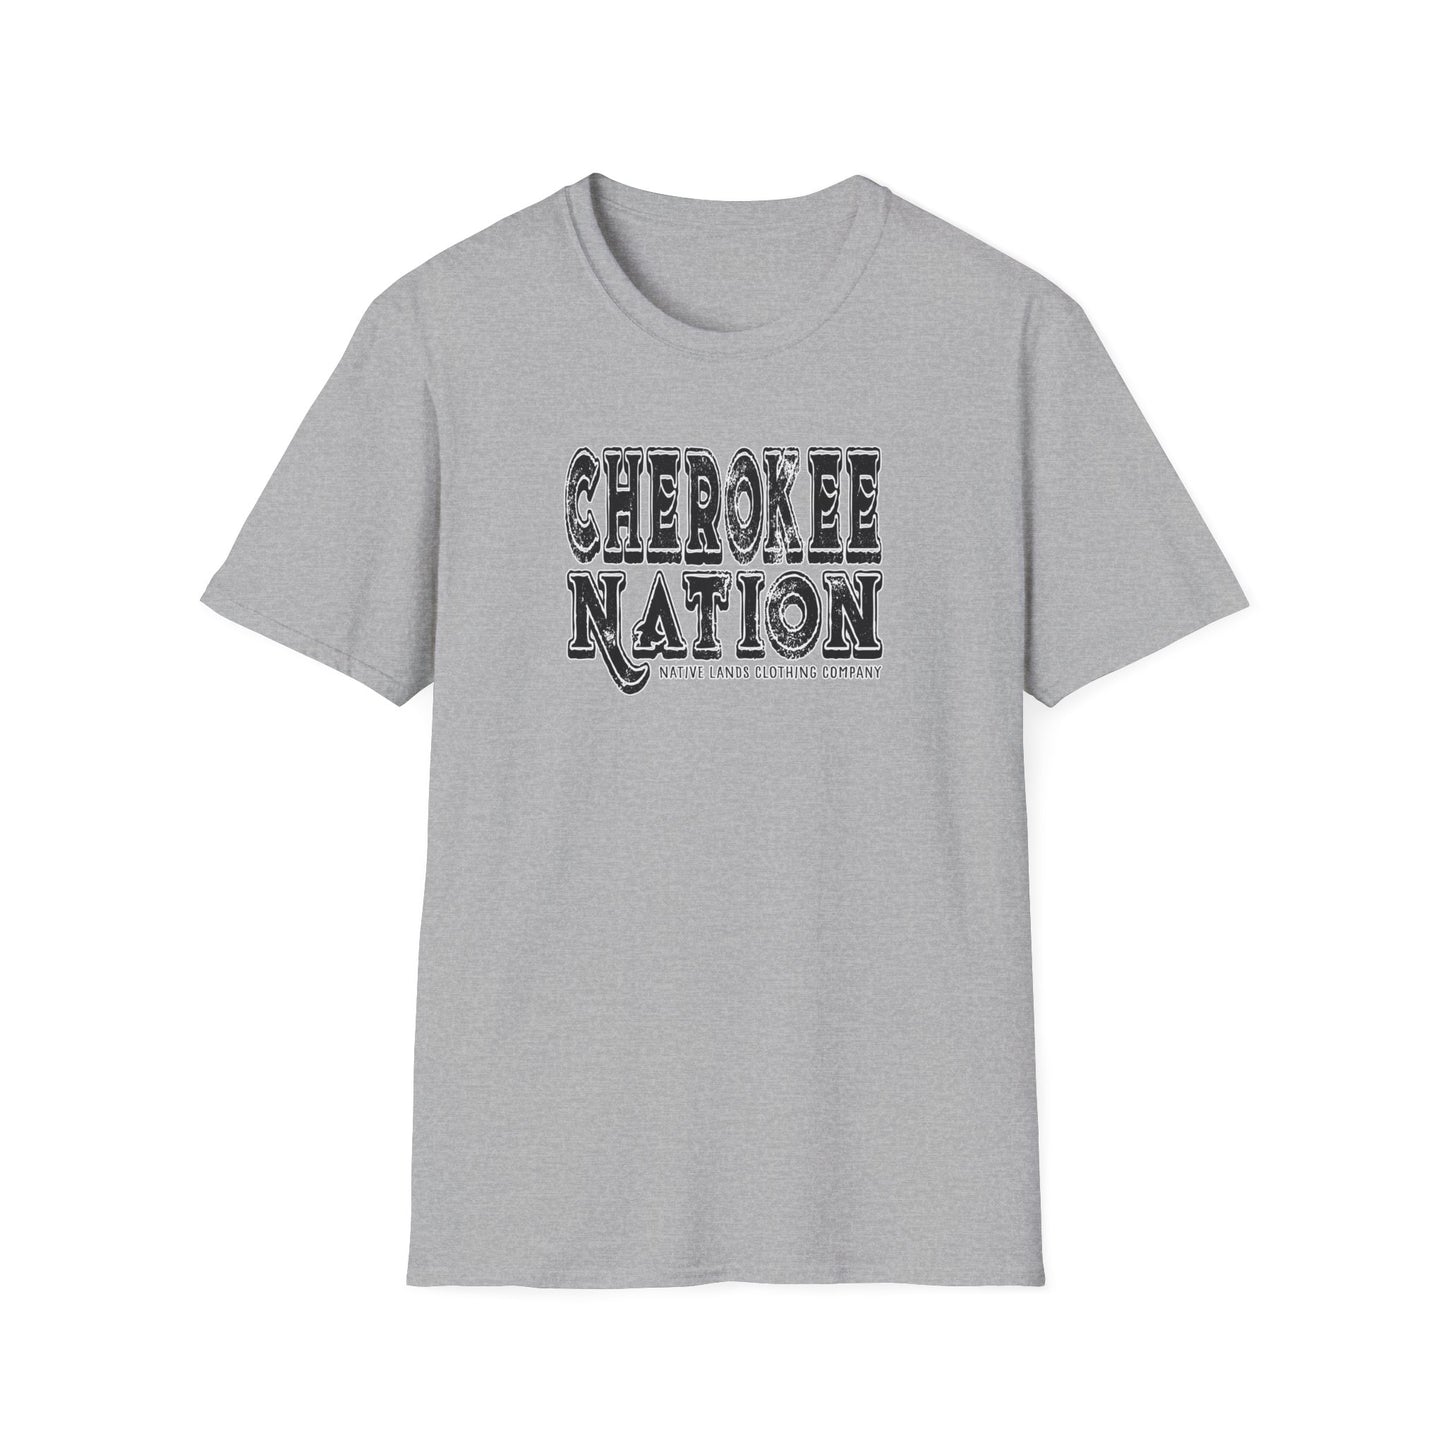 Cherokee Nation Shirt Cotton - Premières Nations, Autochtones canadiens, Autochtones, Amérindiens